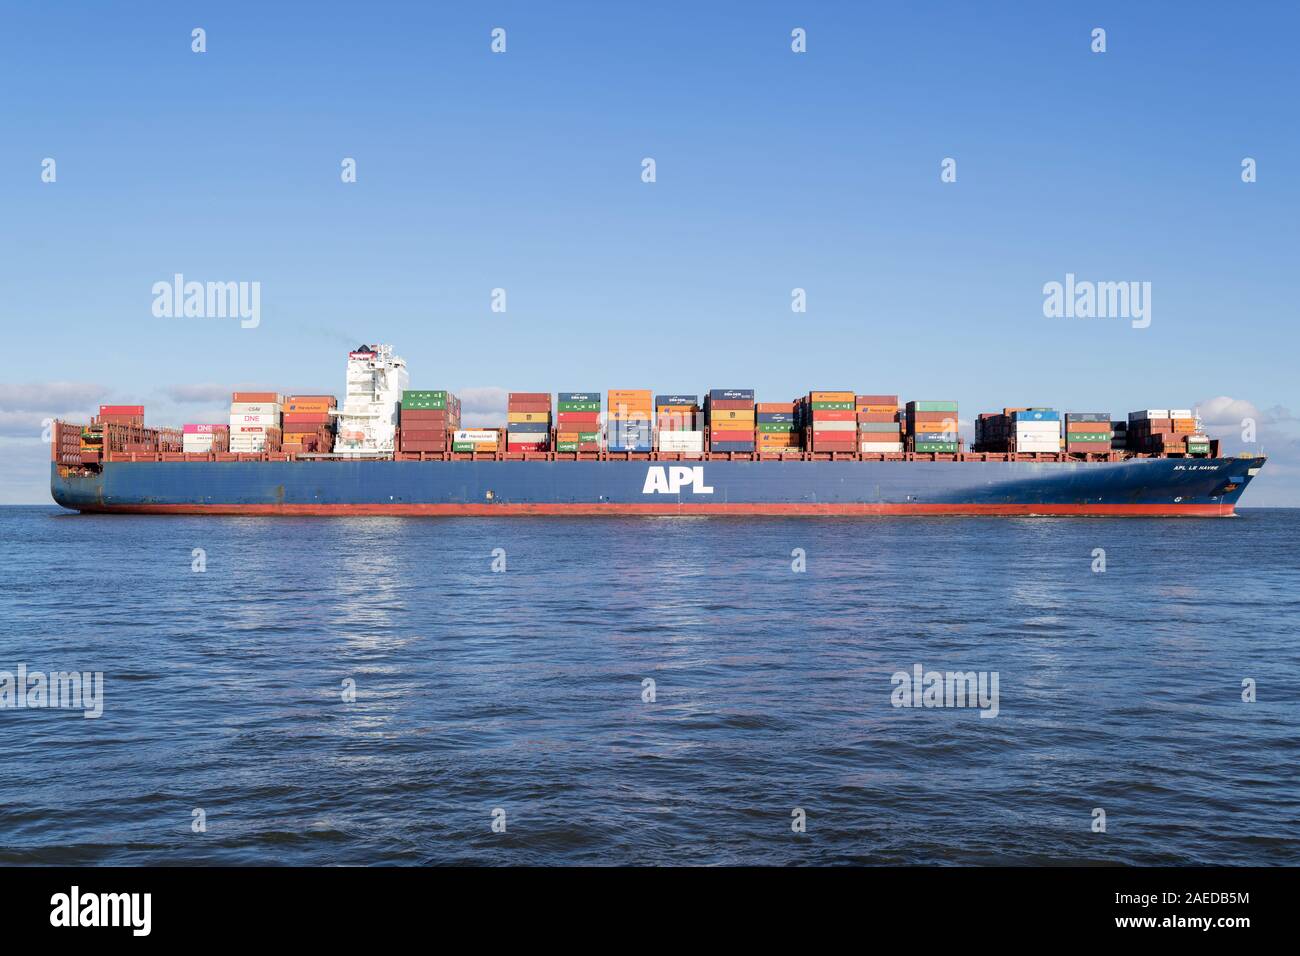 Nave portacontainer APL LE HAVRE sul fiume Elba Foto Stock